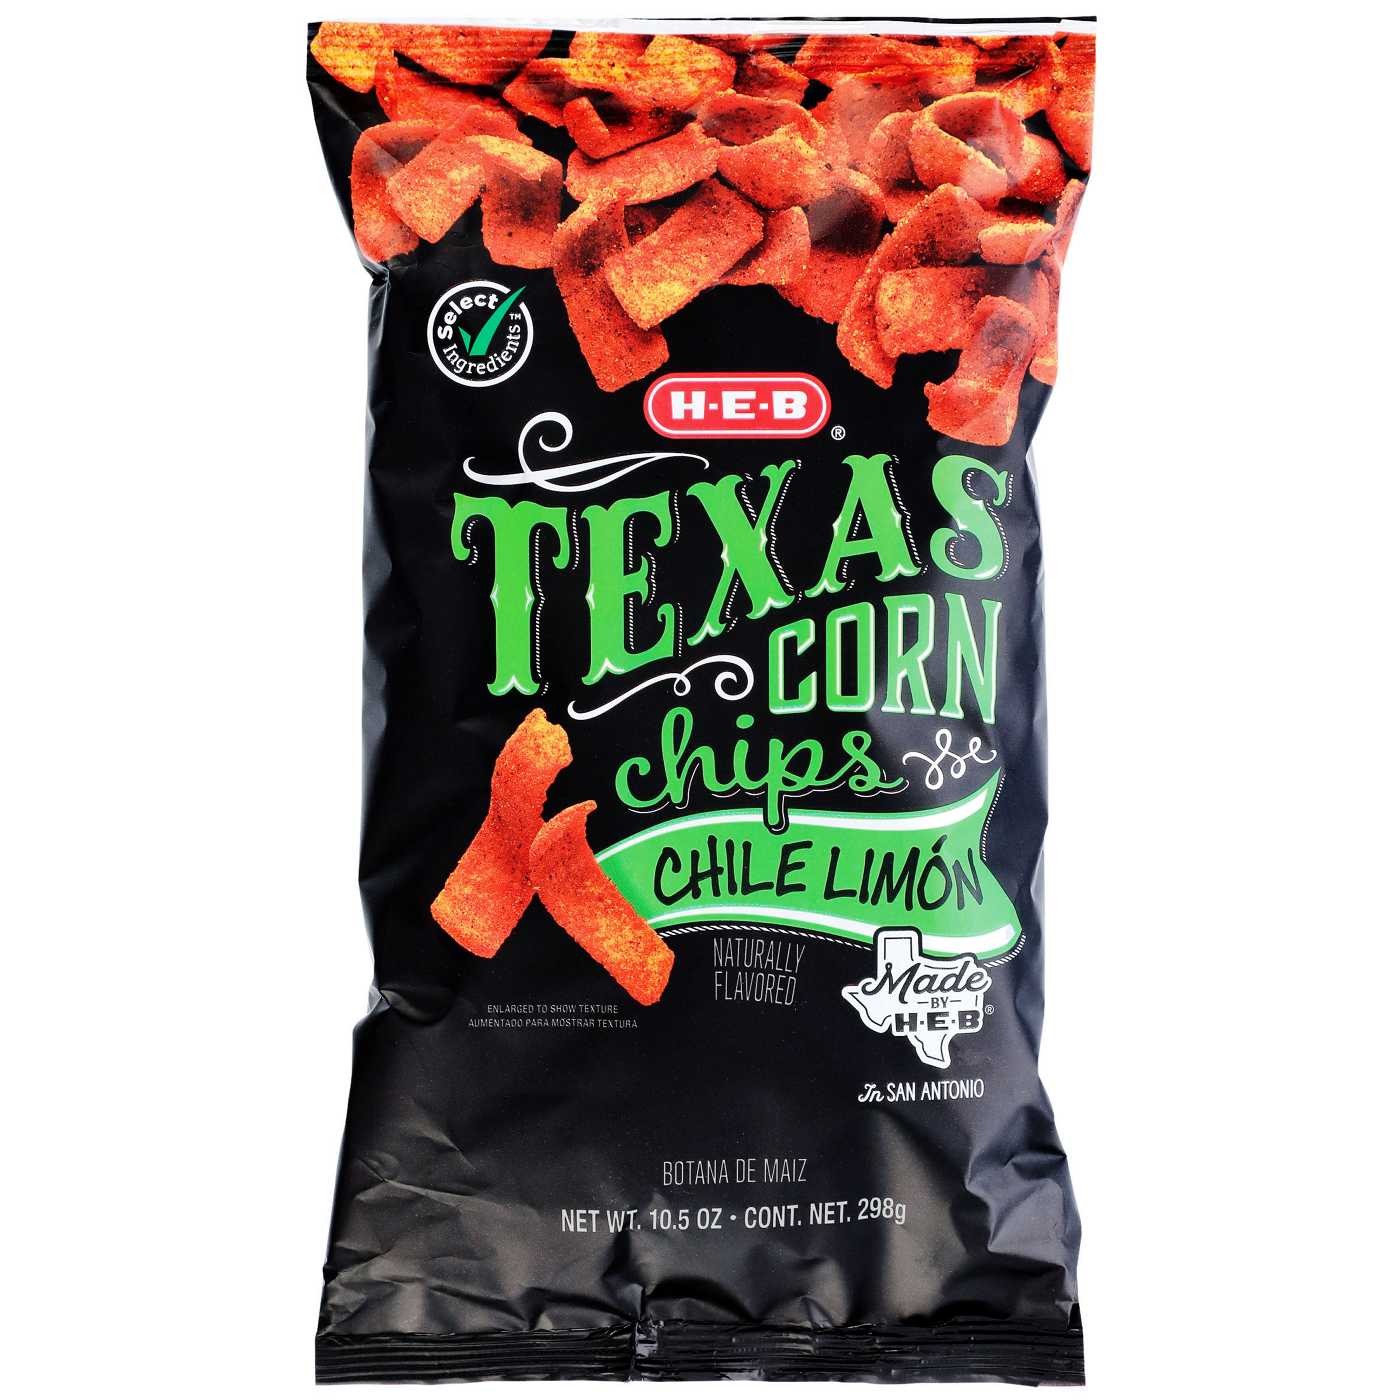 H-E-B Texas Corn Chips - Chile Limón; image 1 of 2